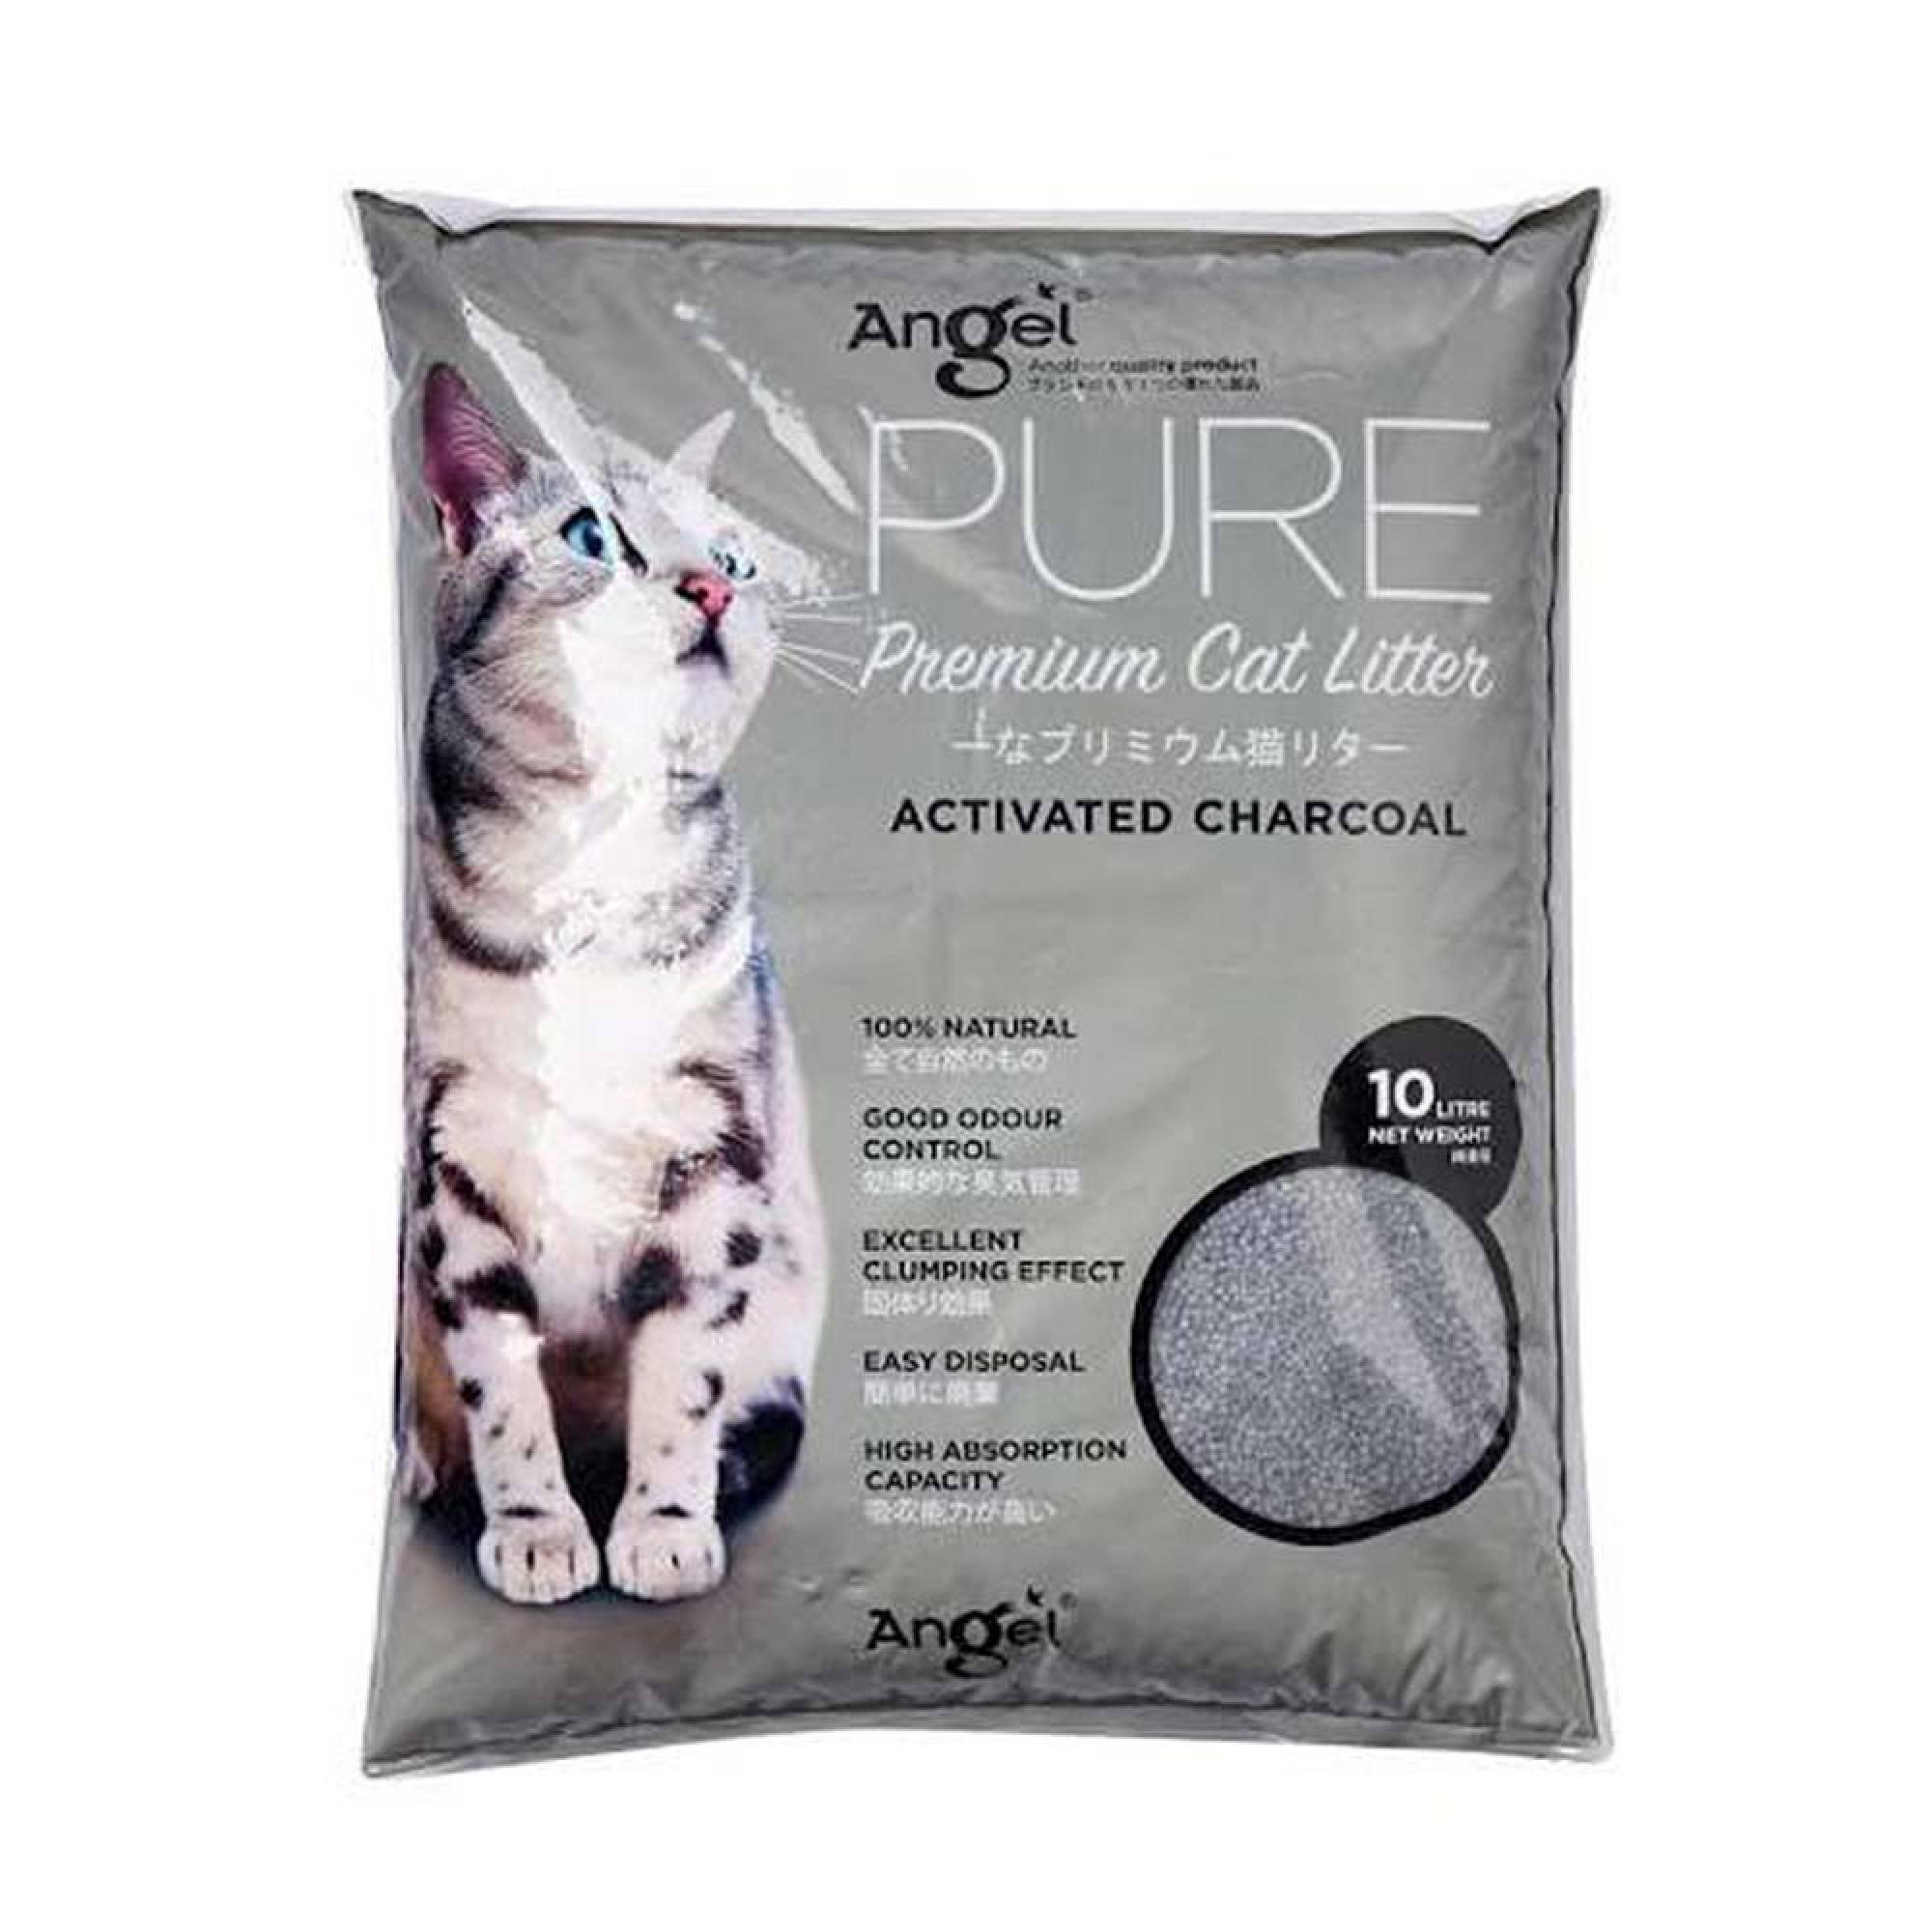 Angel - Pure Premium Cat Litter 10L - Carbon Scented